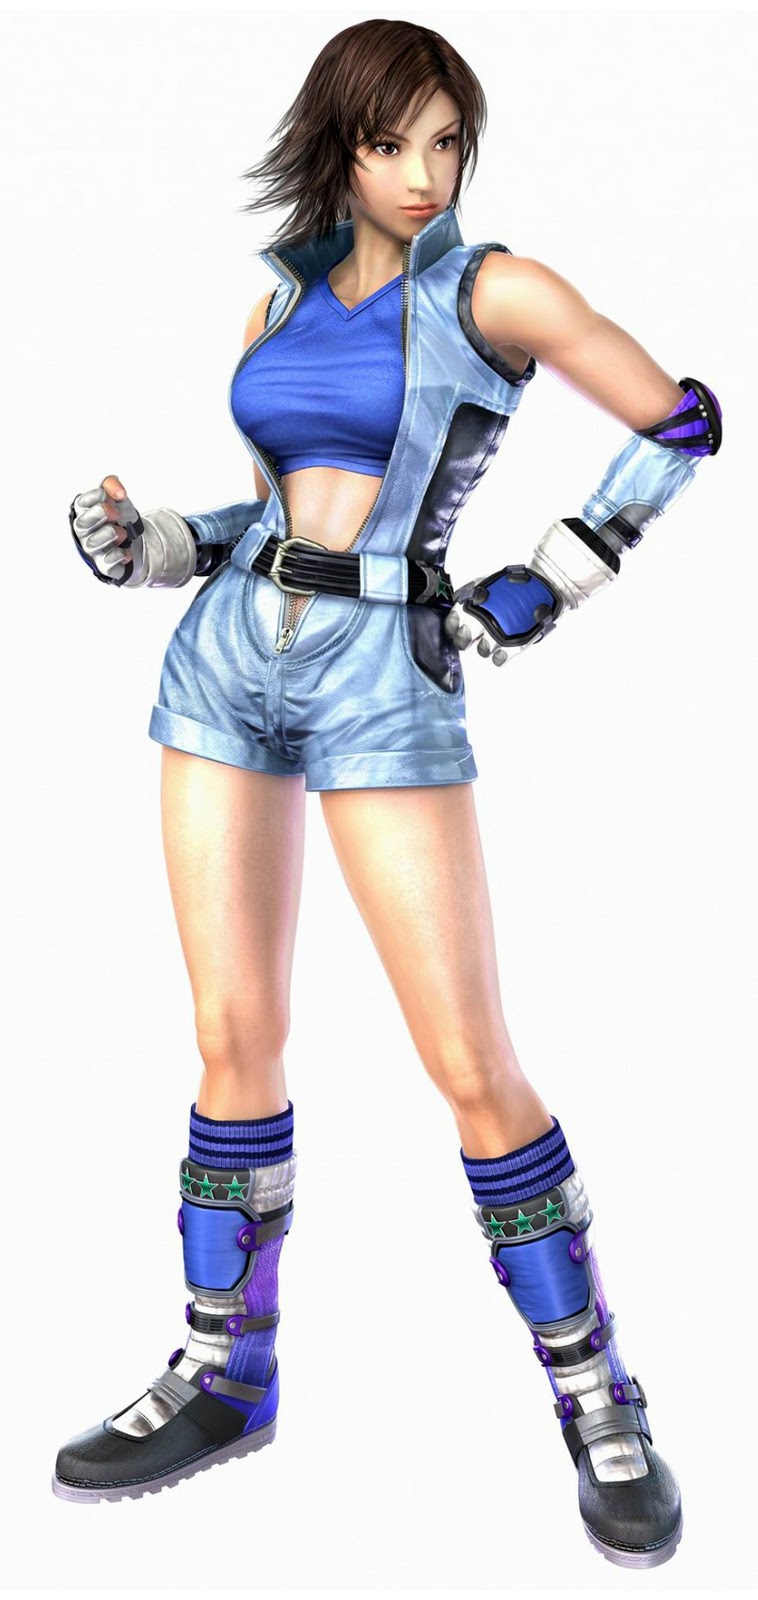 Anna Williams Tekken 6 Nina Williams Tekken 3, garota do quimono